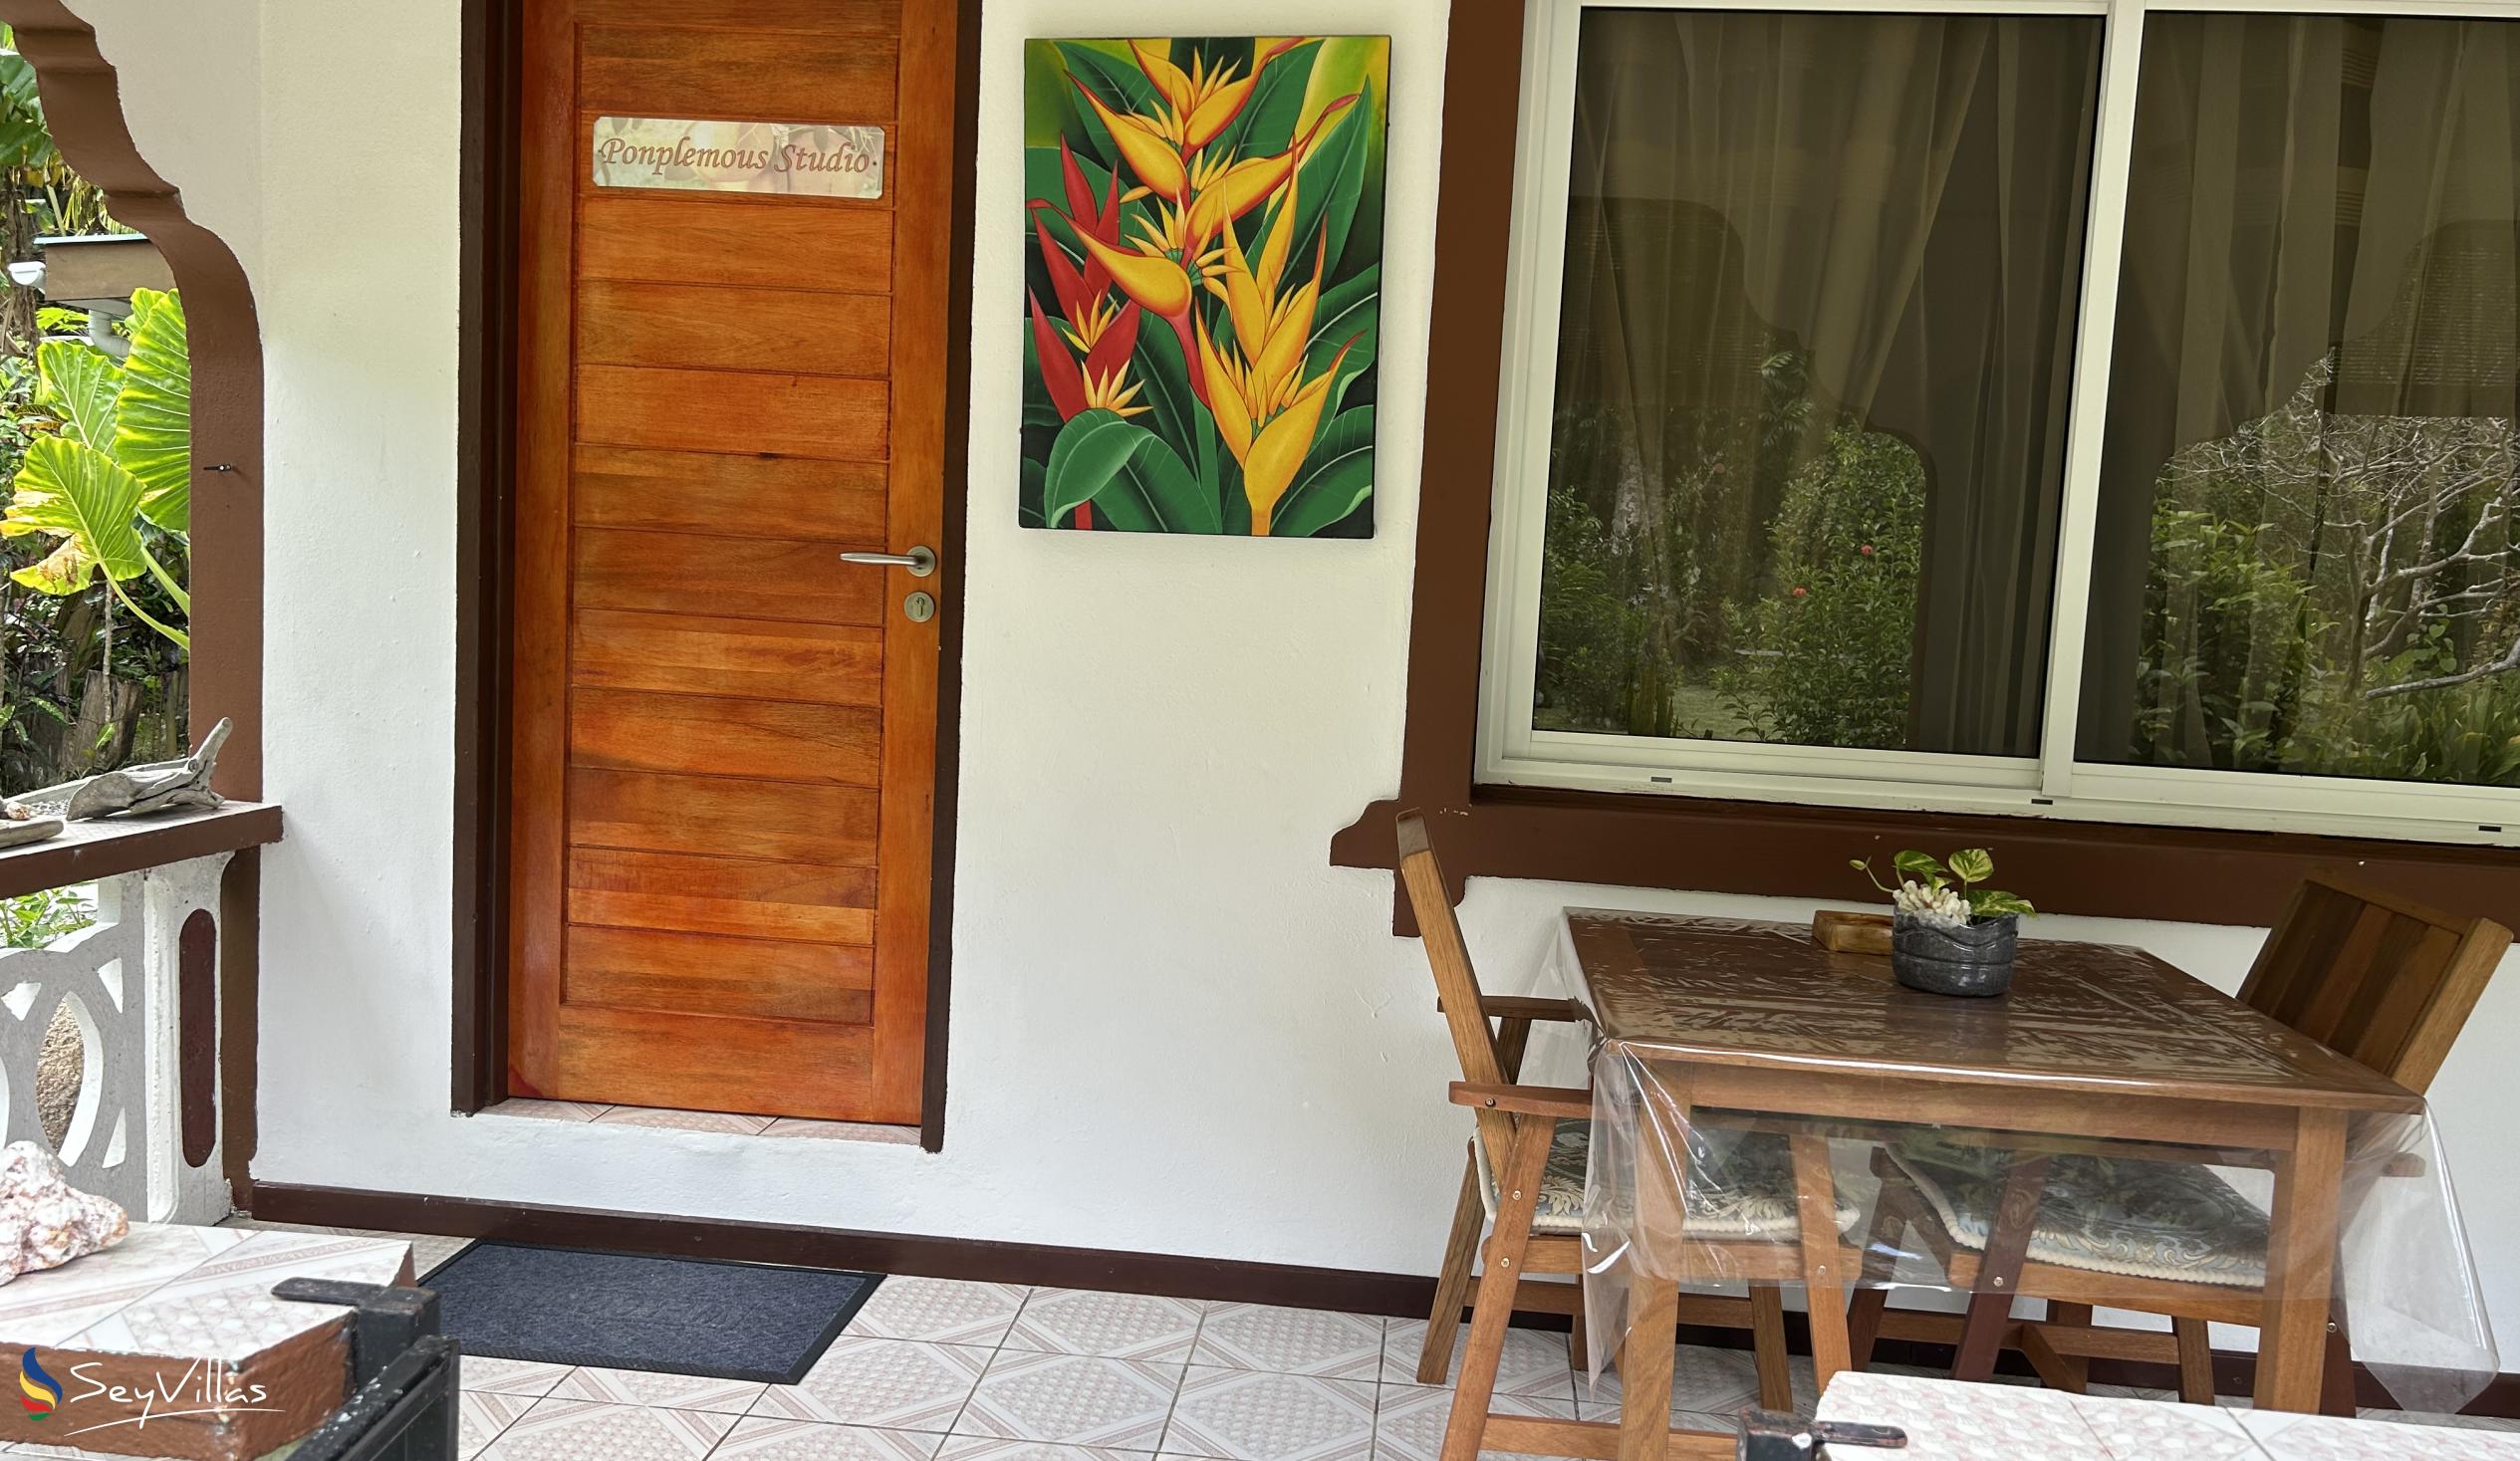 Foto 17: Dan Zoranz Self Catering Guest House - Ponplemous Studio - La Digue (Seychellen)